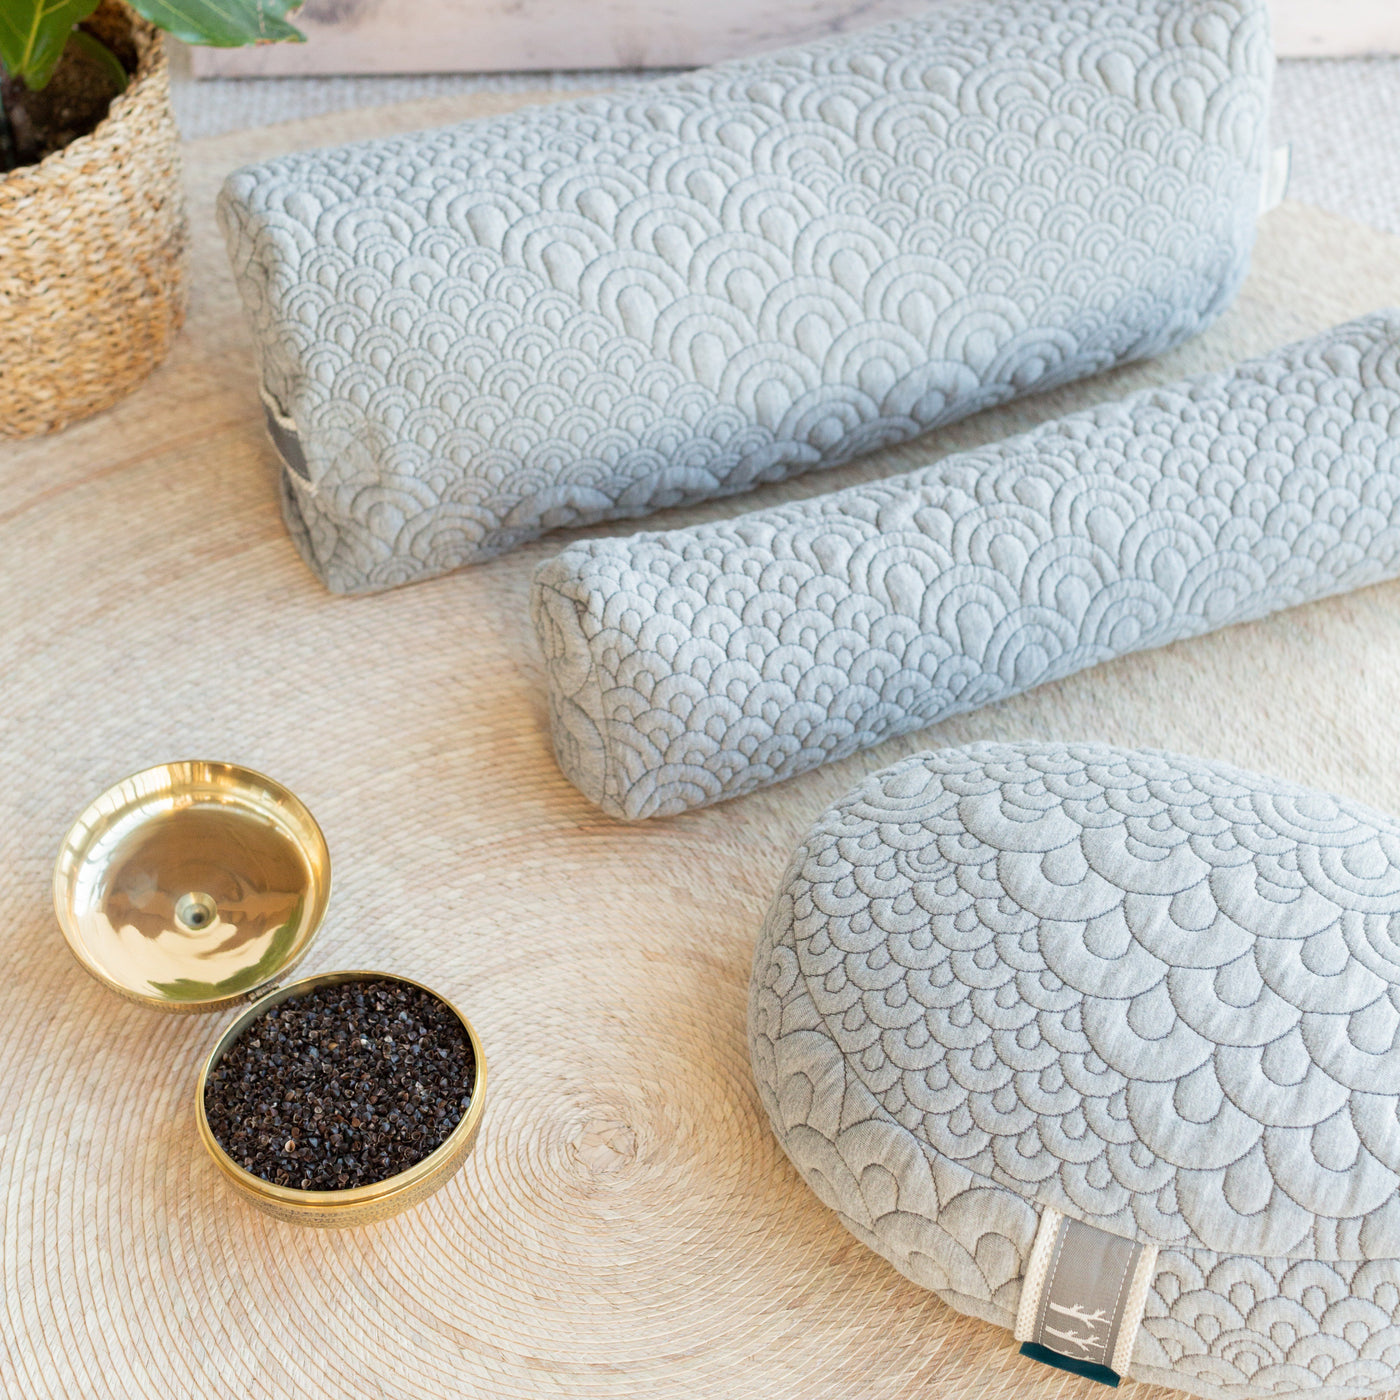 Leg Elevation Cushion with Memory Foam | Brentwood Home Cushion